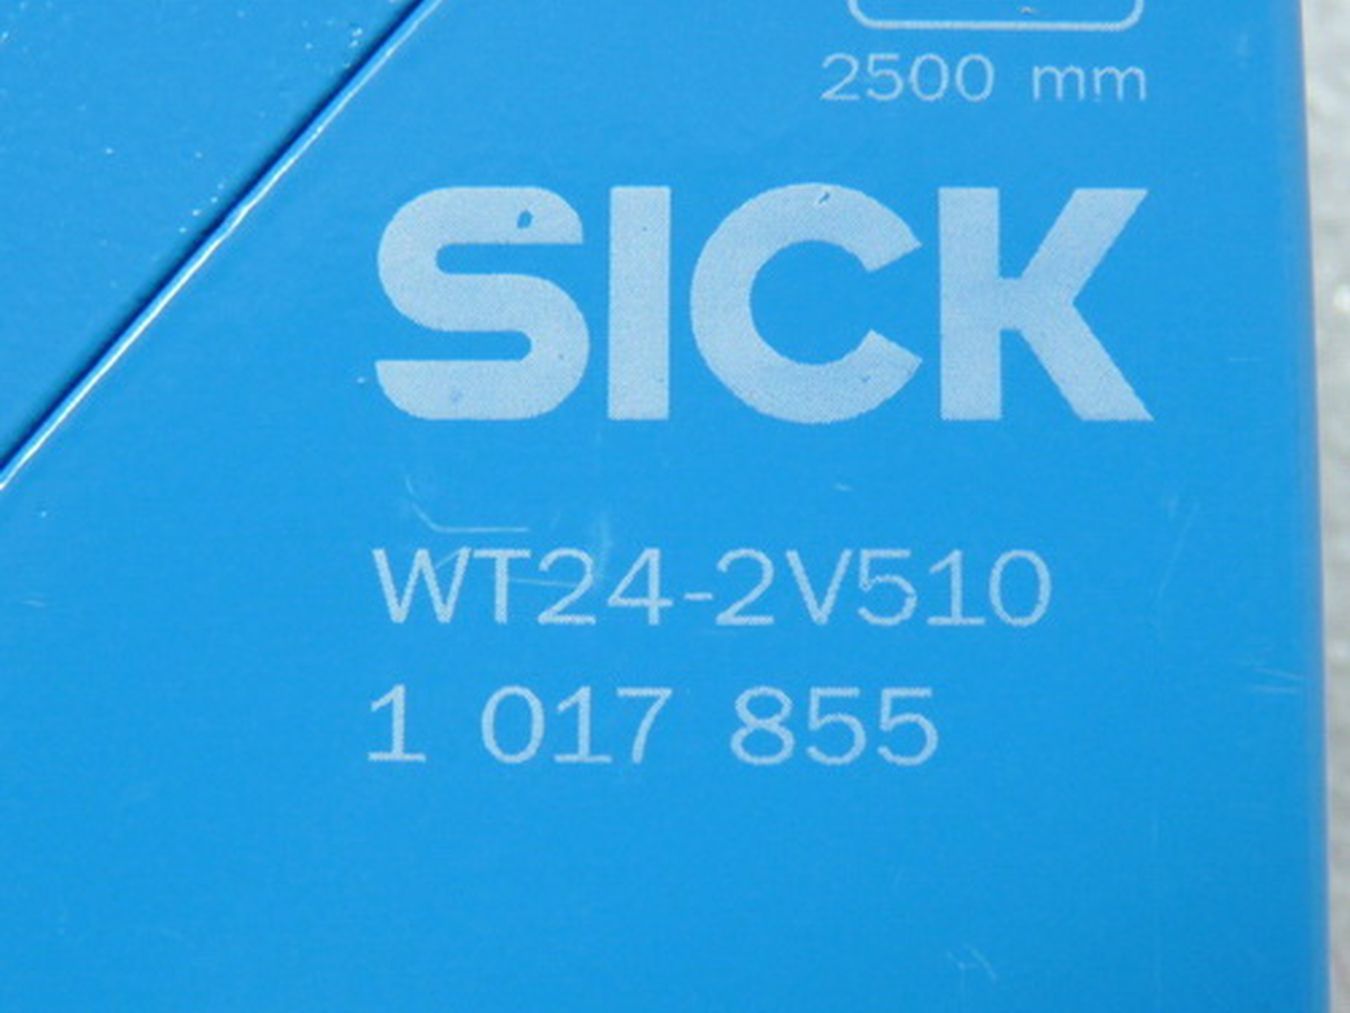 Sick WT24-2V510 Reflexions Lichttaster Art Nr 1017855 - unge WT24-2V510,施克,PLC